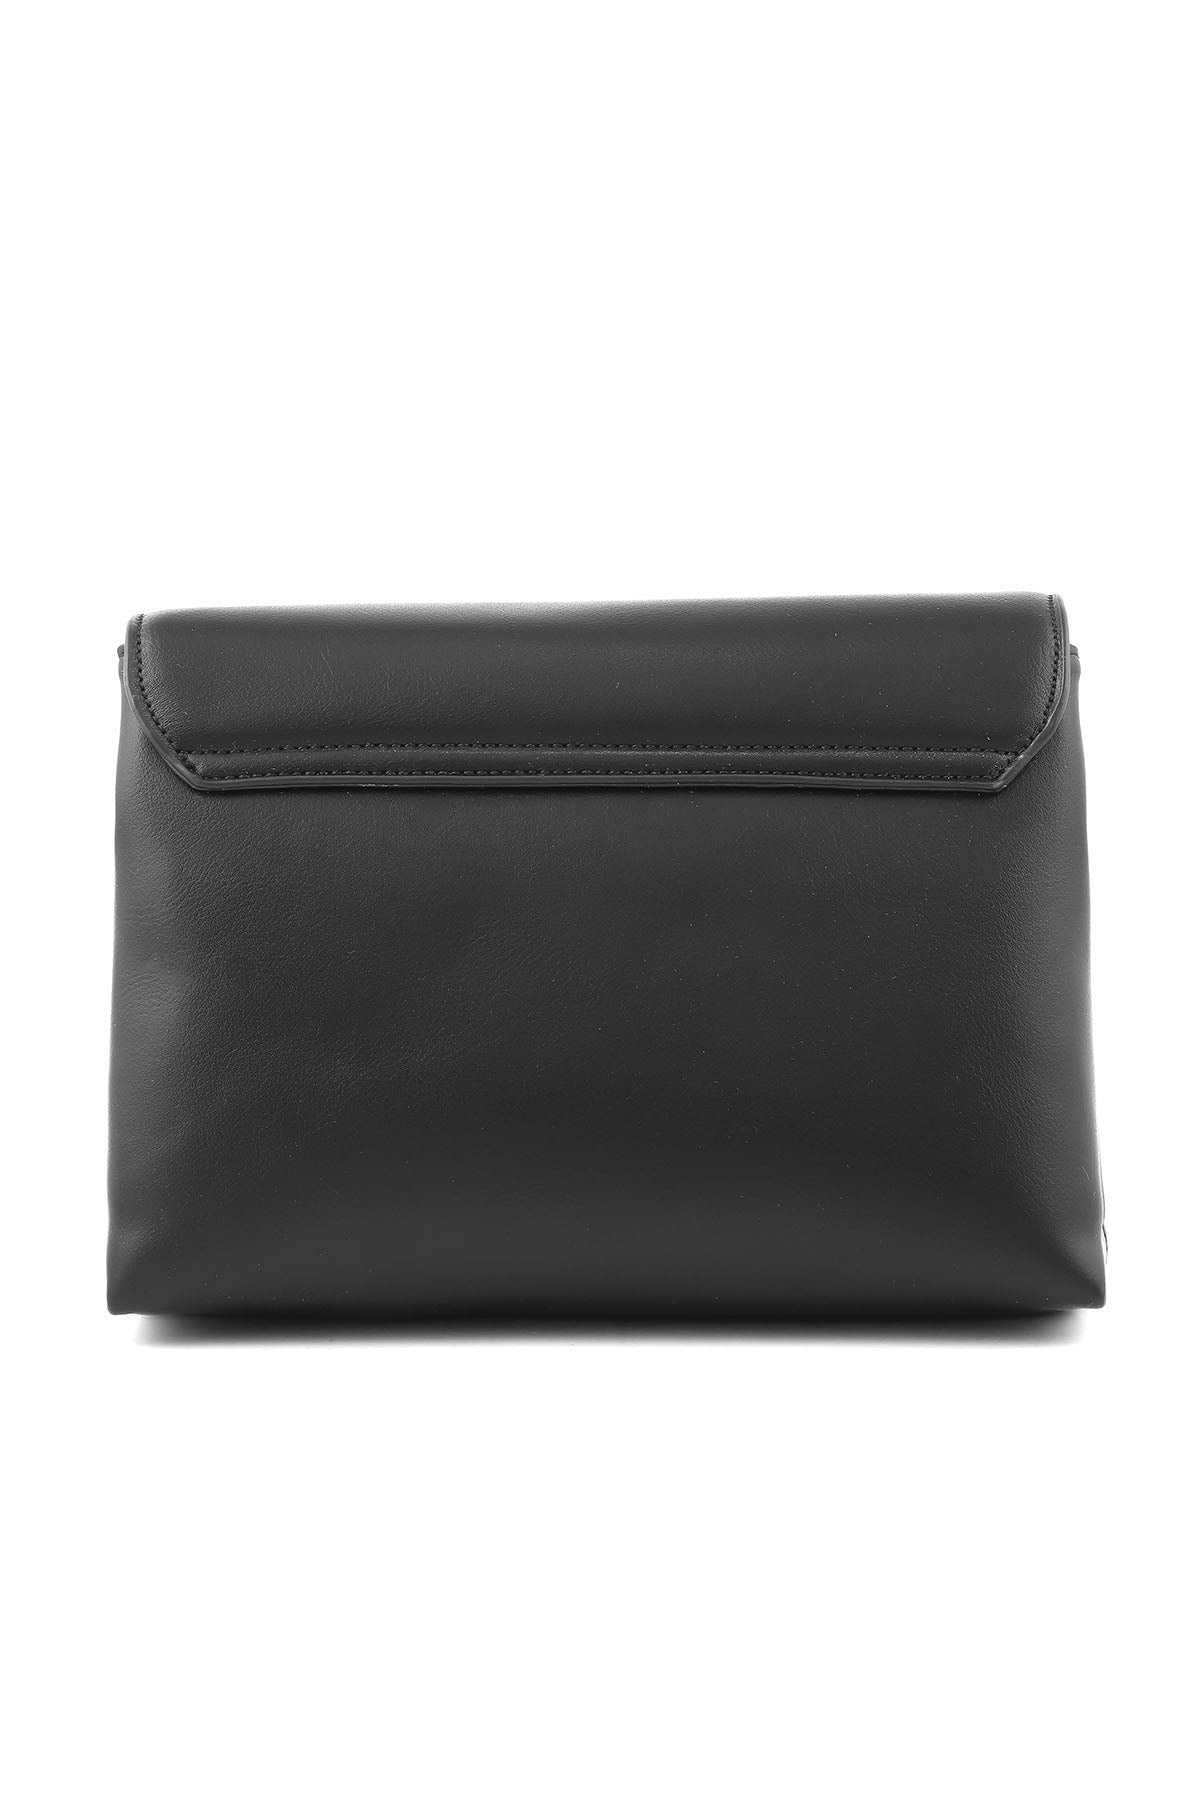 Flap Shoulder Bags B15028-Black